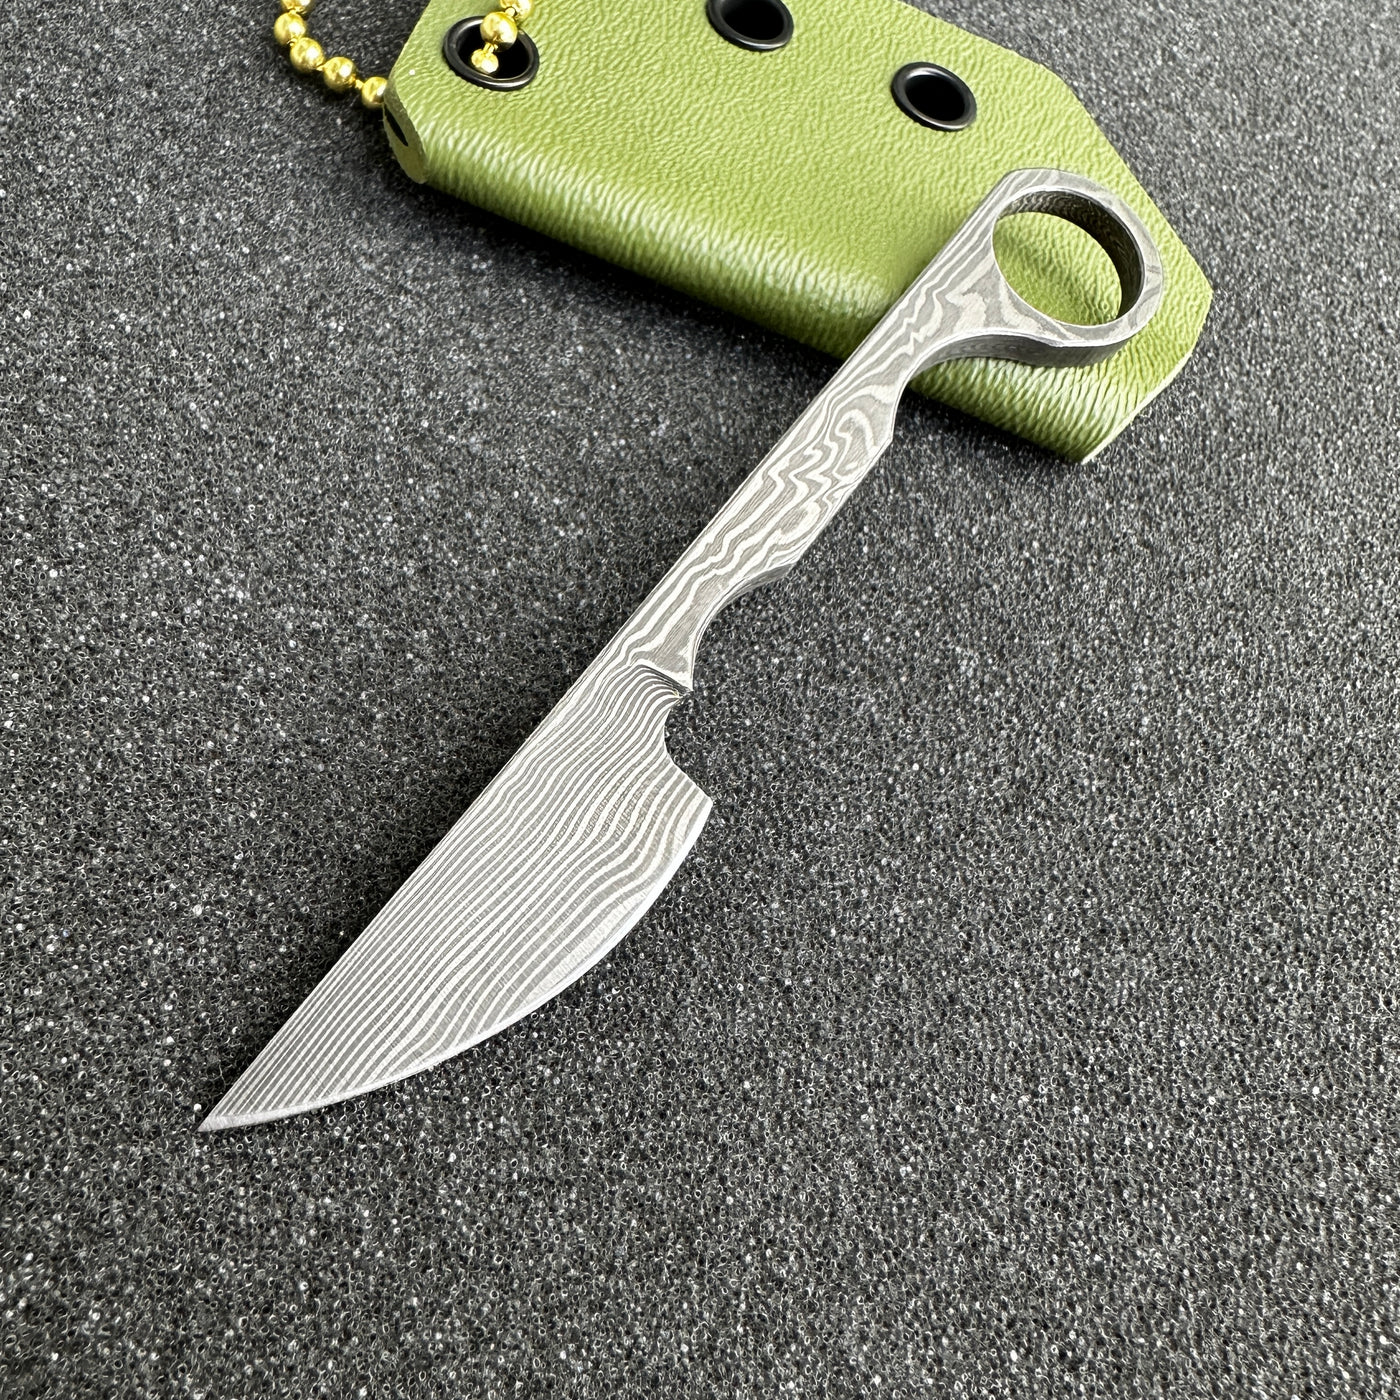 KA Custom - Damasteel Dr. Bird Trout - One-Off Fixed Blade (Small, green)